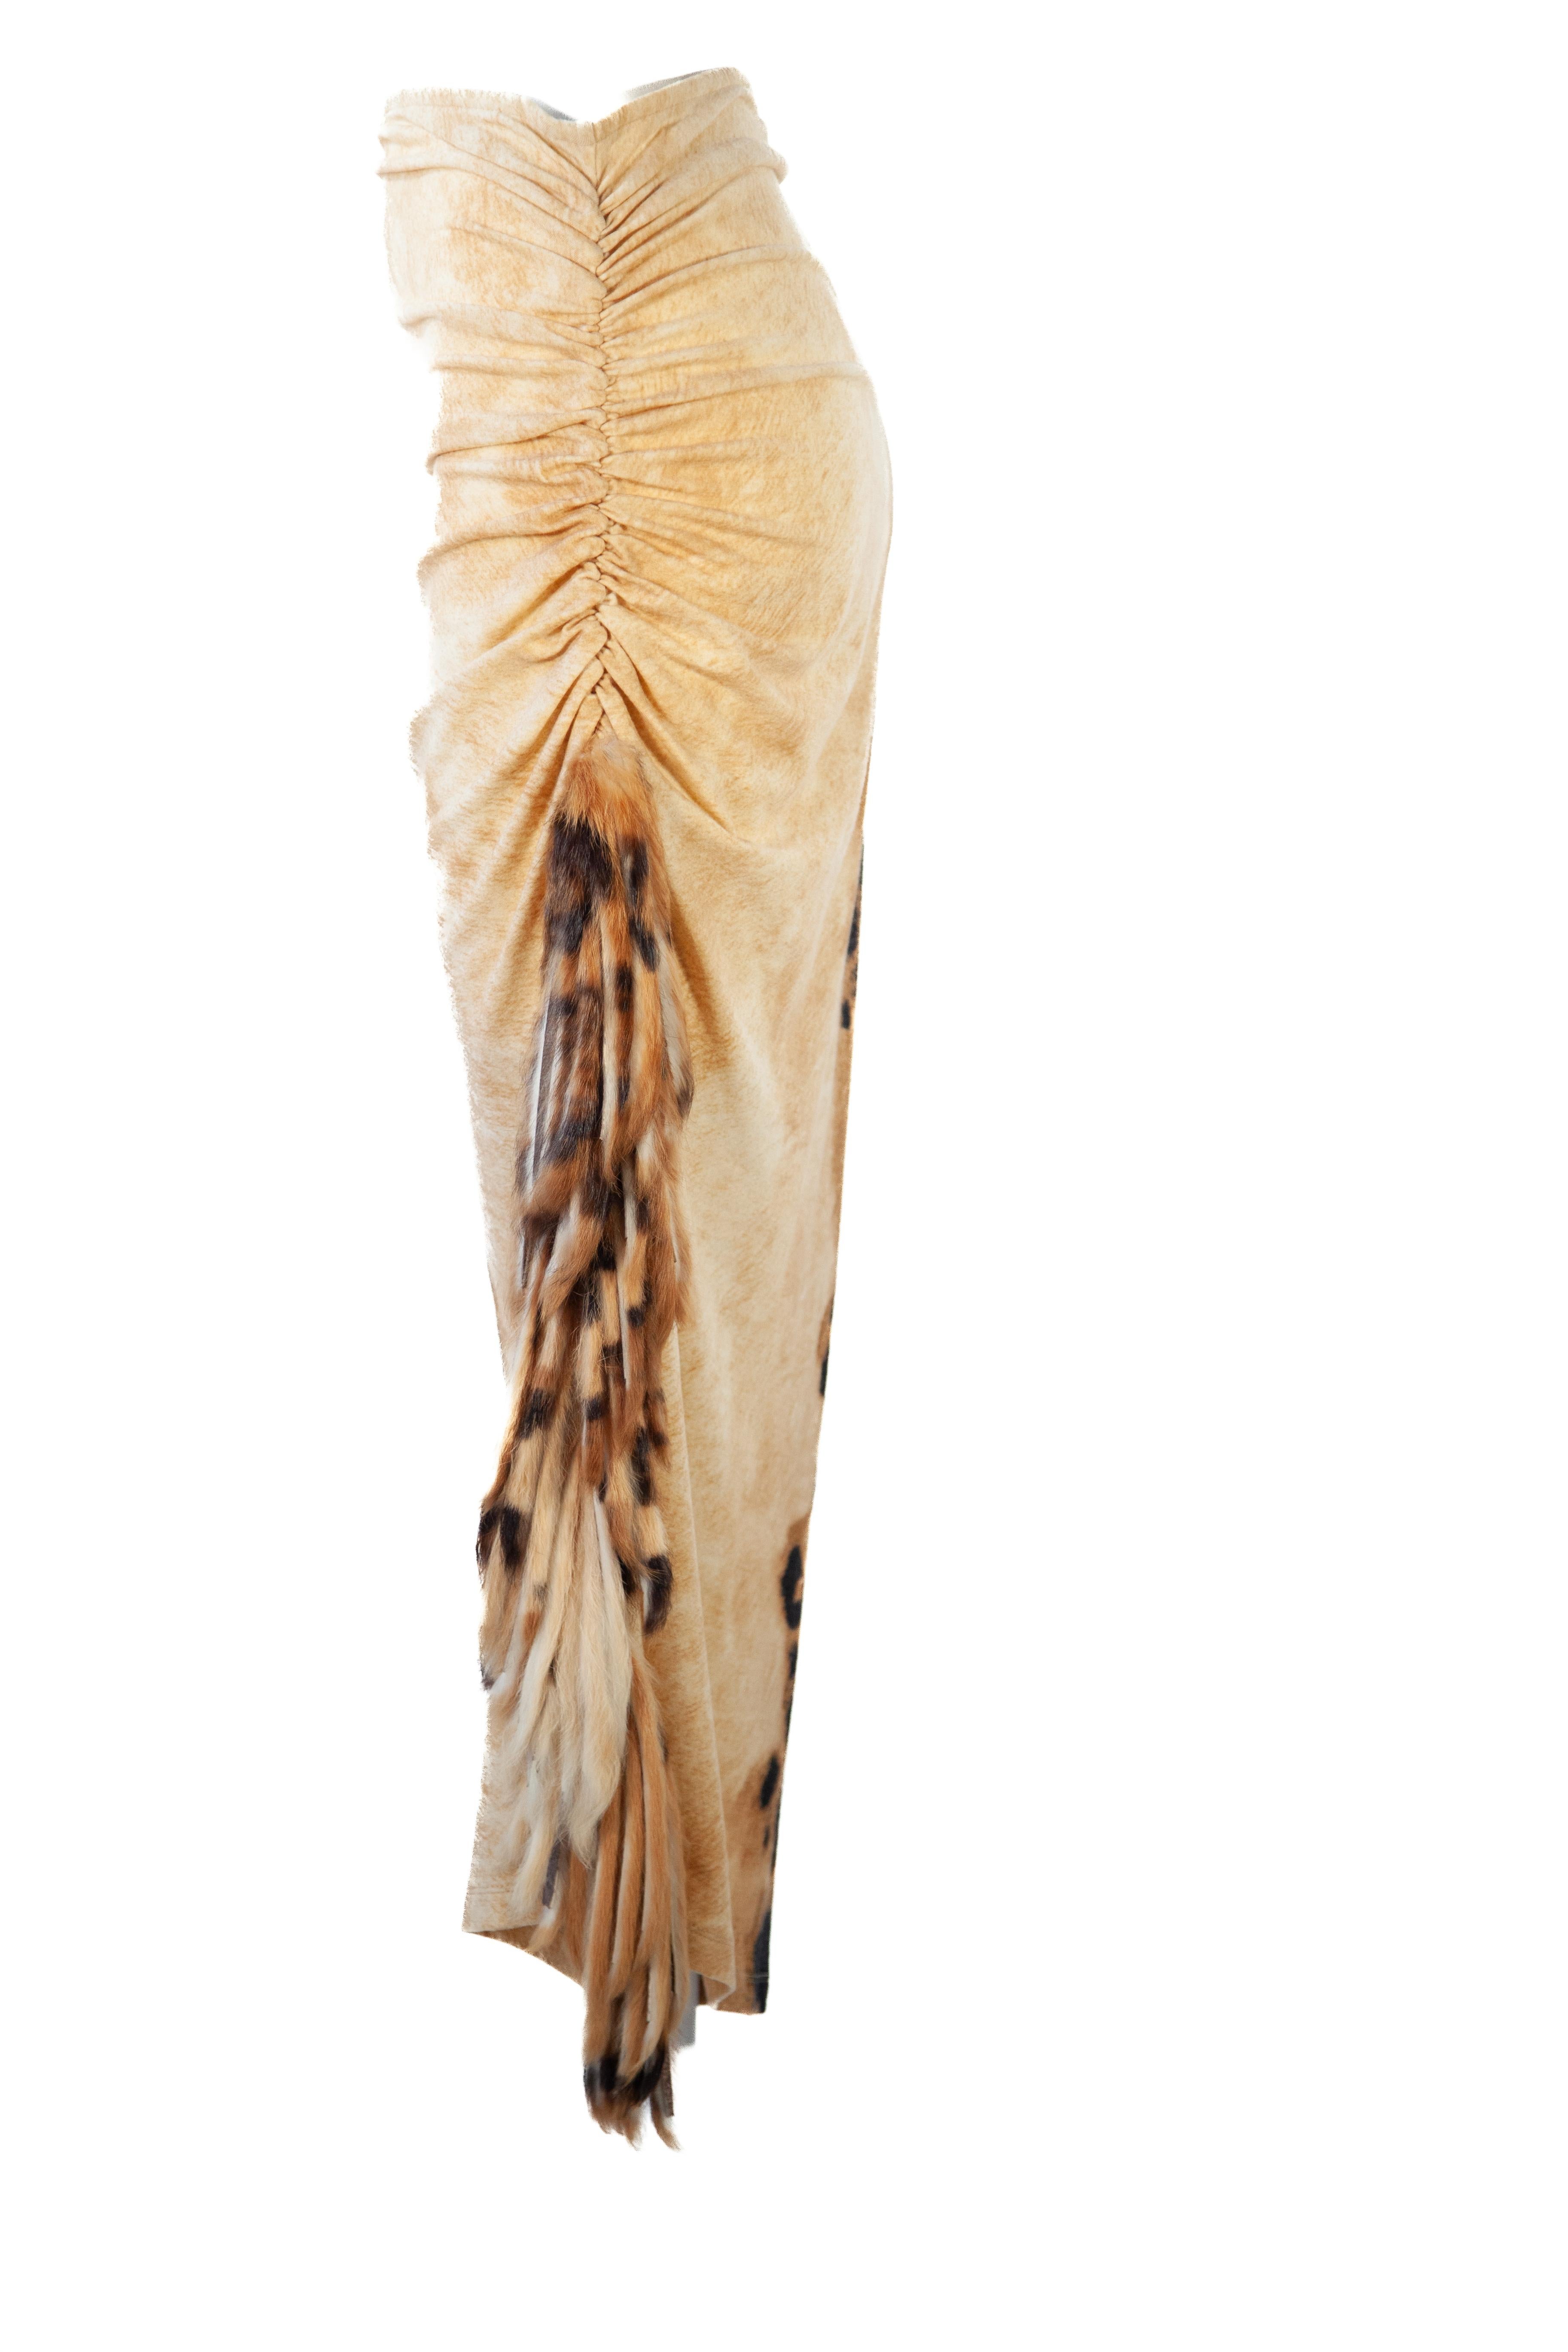 Long skirt, rouching and side fox fur

Waist 27